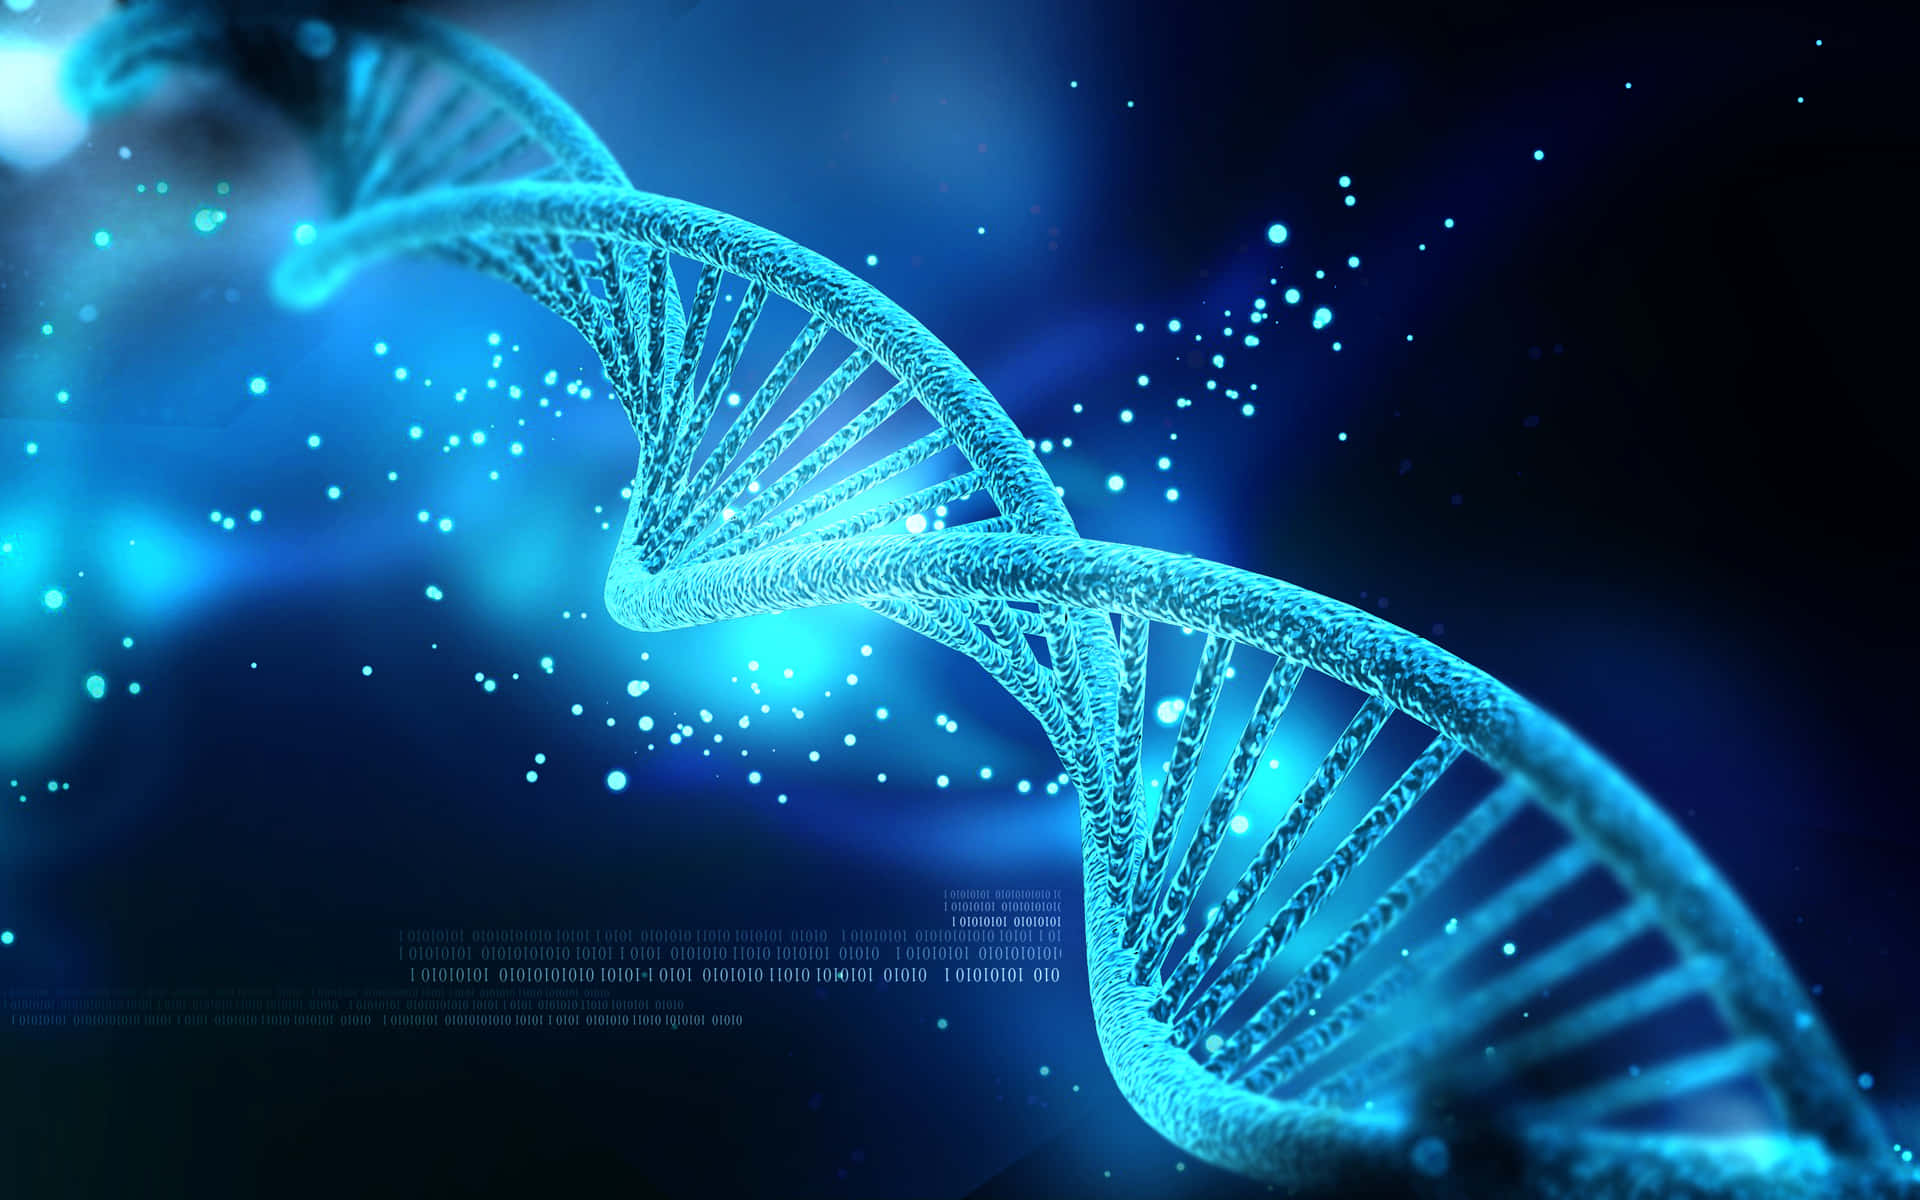 Unlock the secrets of the genetic code